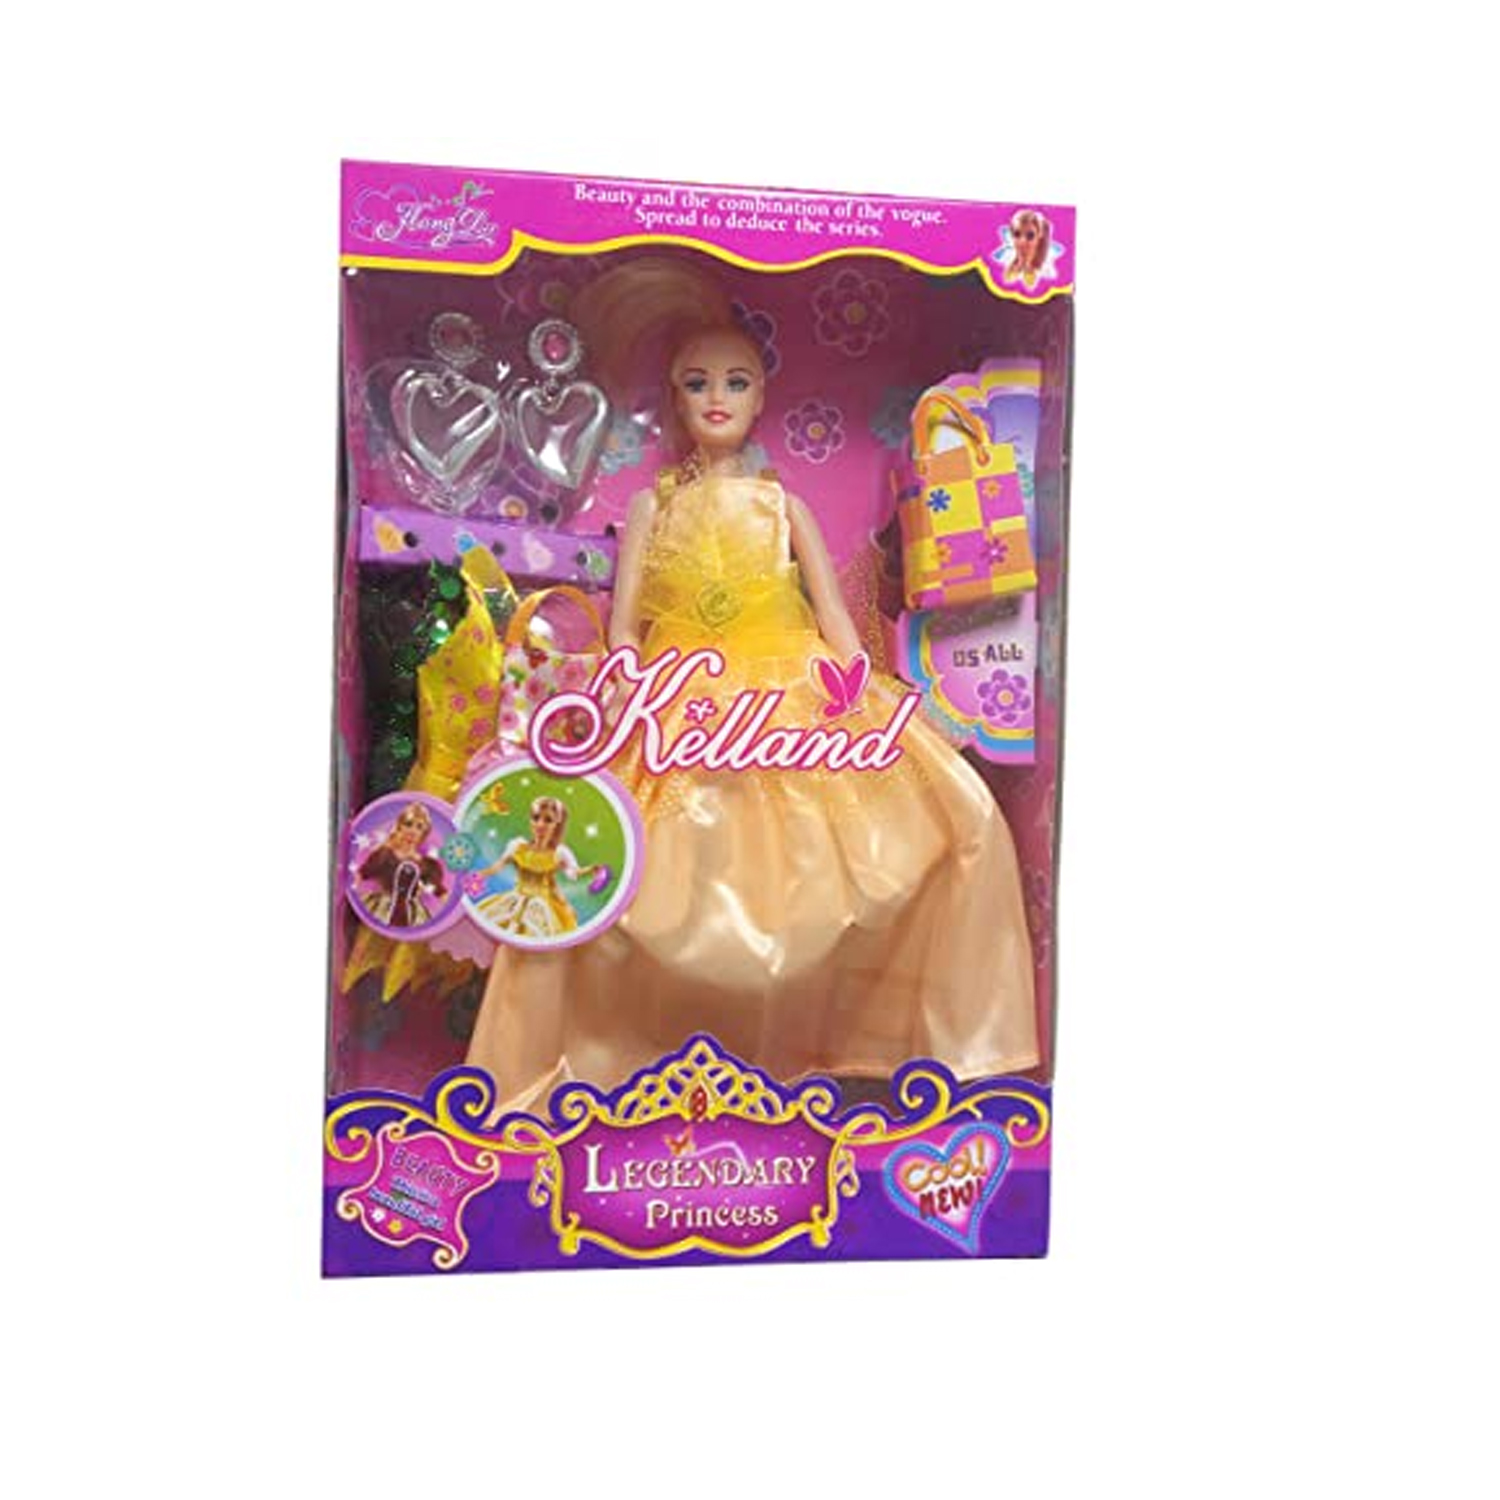 Legendary Princess Beautiful Barbie Doll with Beauty Accessories Like Purse Earrings etc Girls & Kids